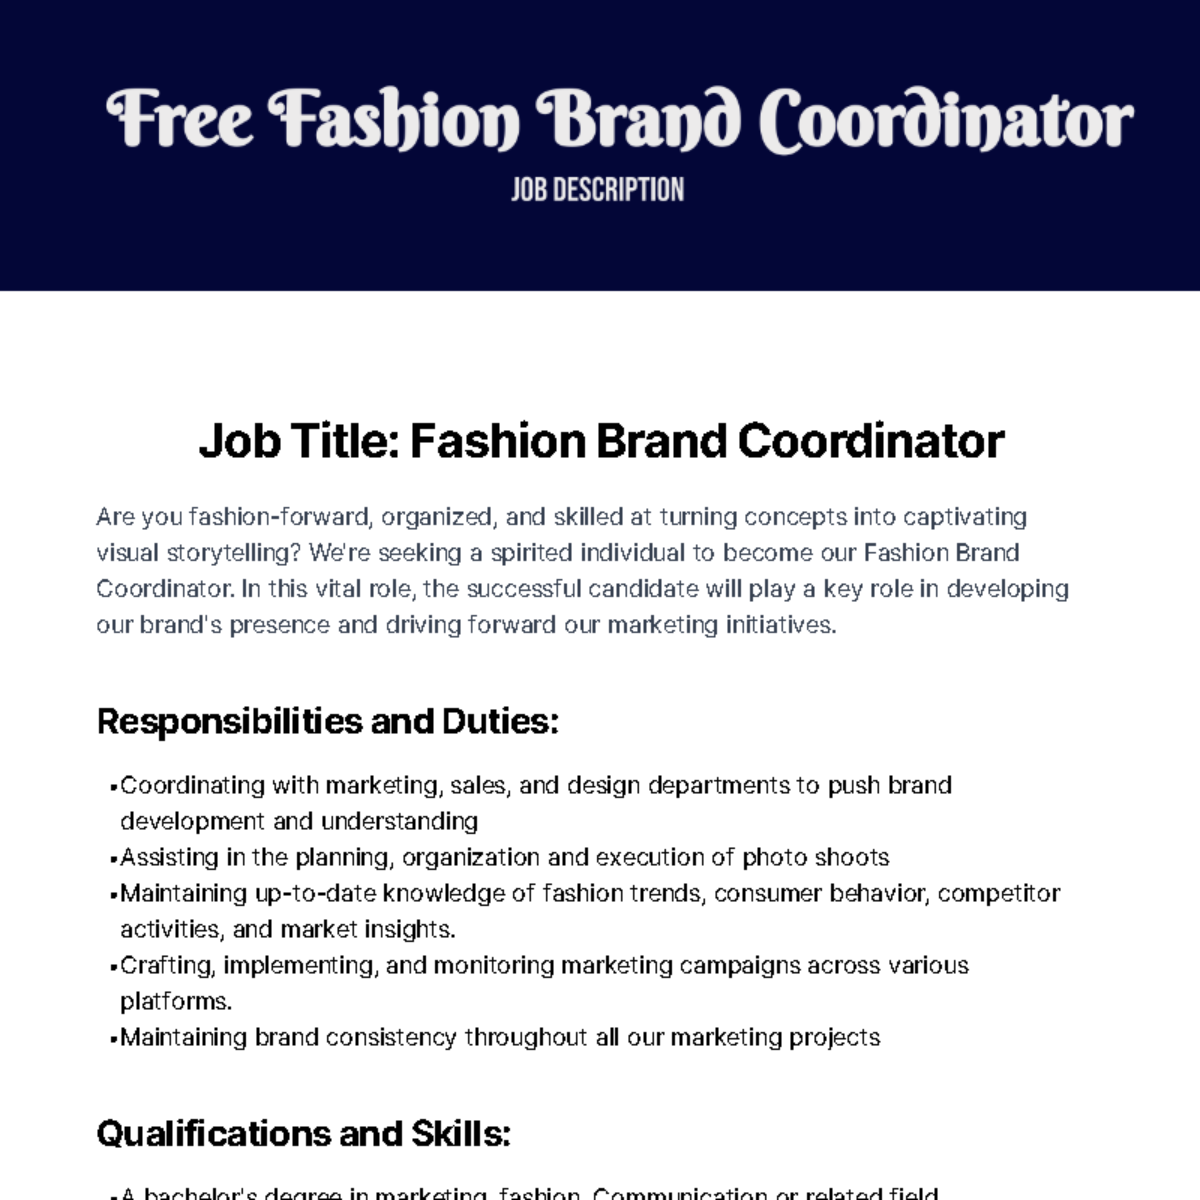 Free Fashion Brand Coordinator Job Description Template